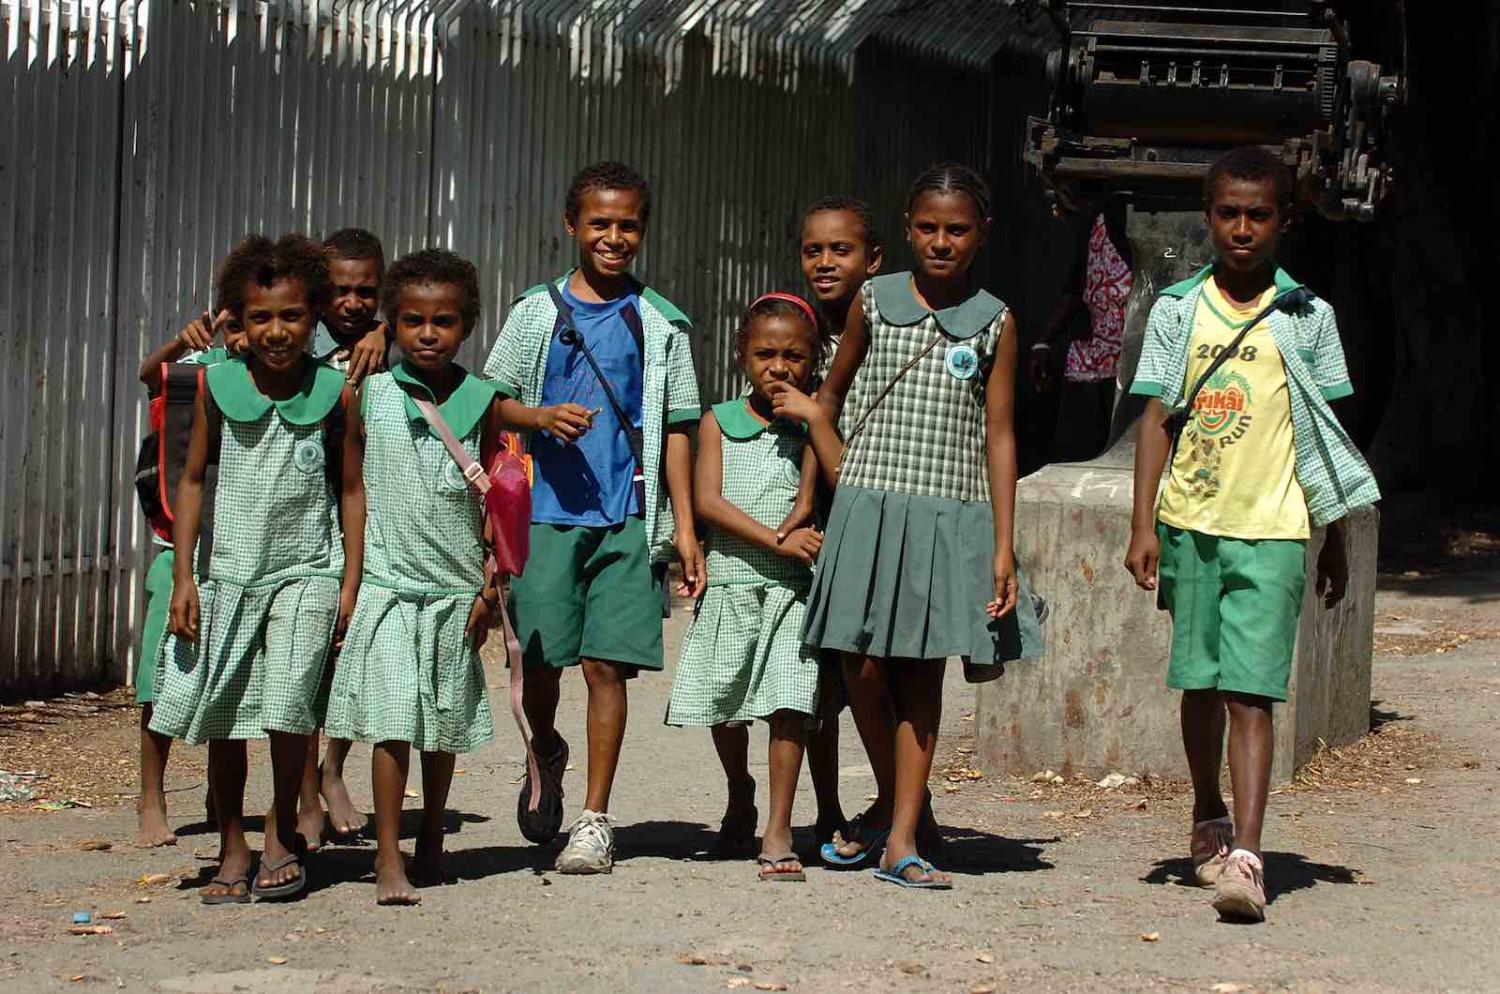 Schoolchildren in Port Moresby, Papua New Guinea (Photo: Commonwealth Secretariat/Flickr)